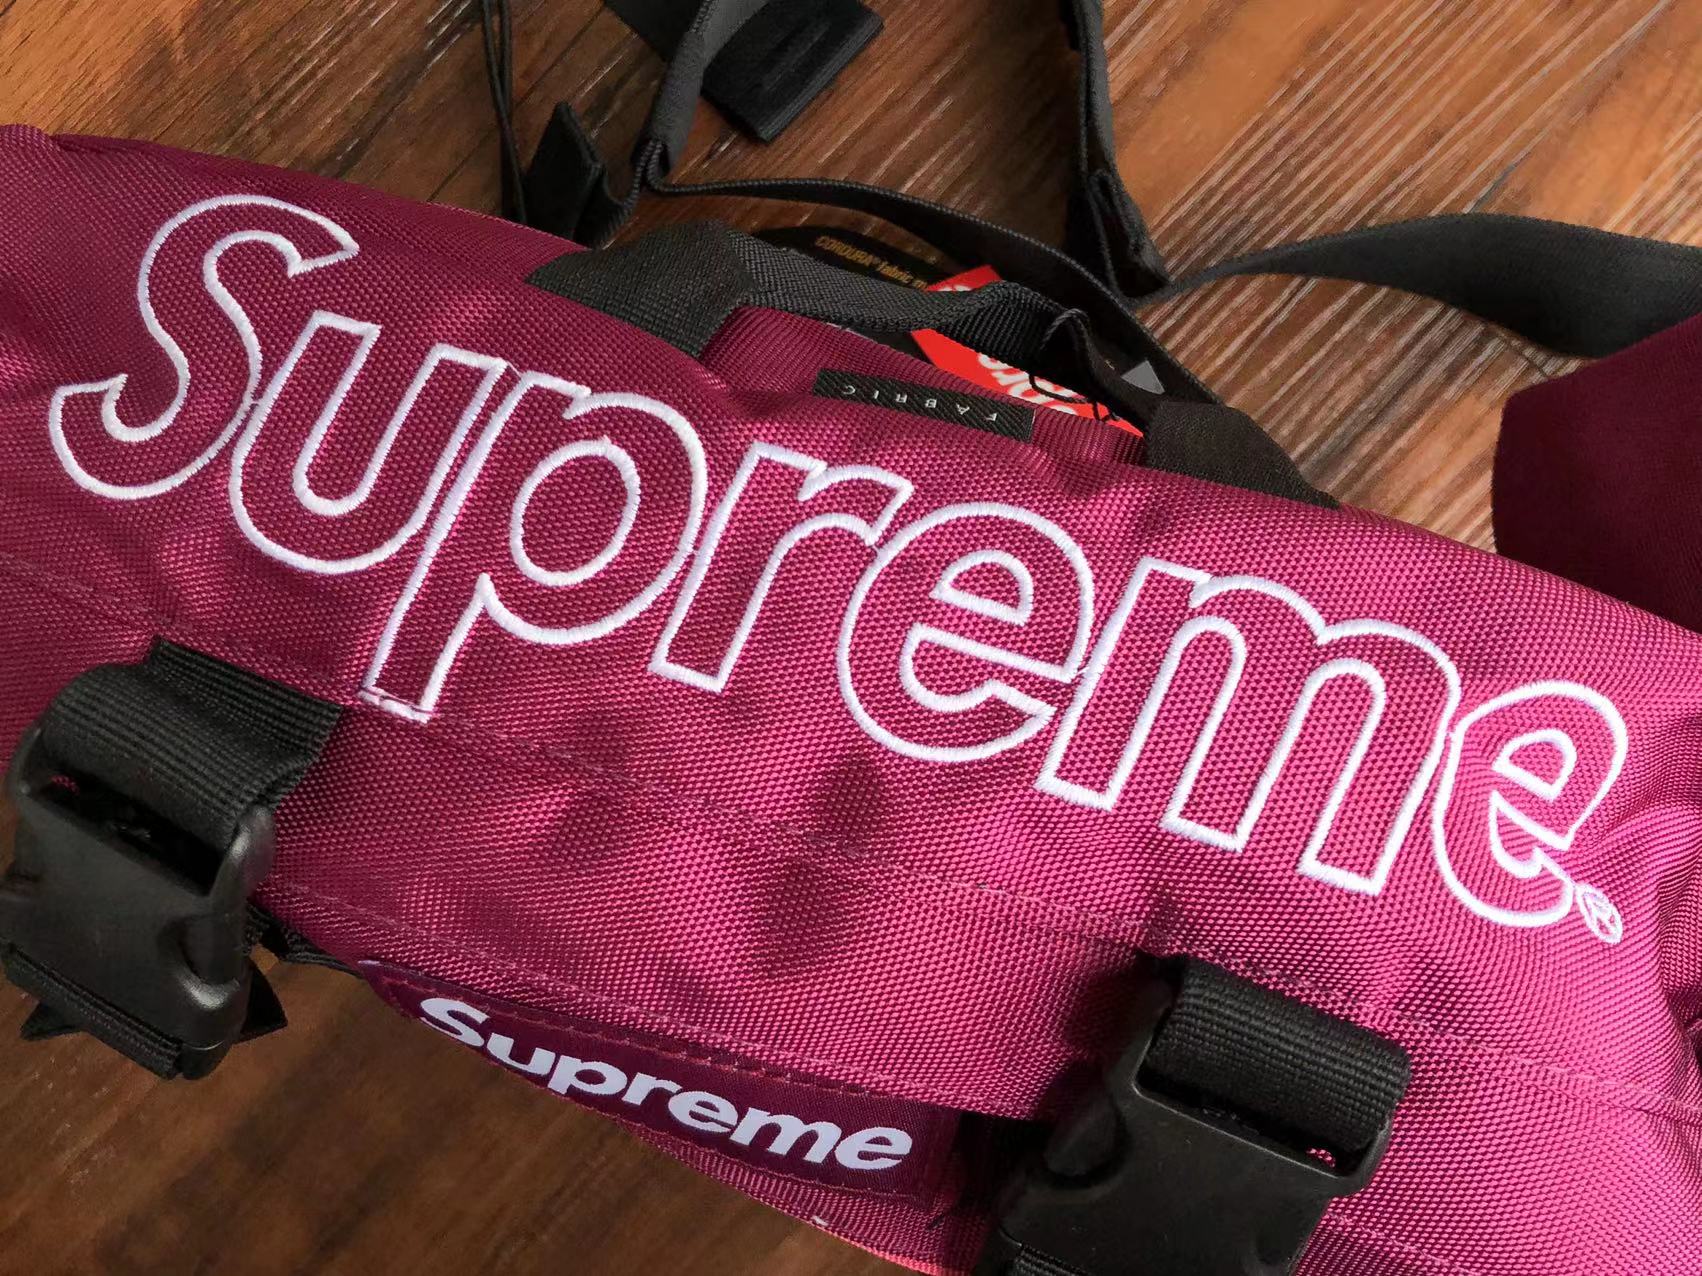 SUPREME WAIST BAG (FW19) REAL TREE CAMO (NEW) - – Secret Sneaker Store  Online